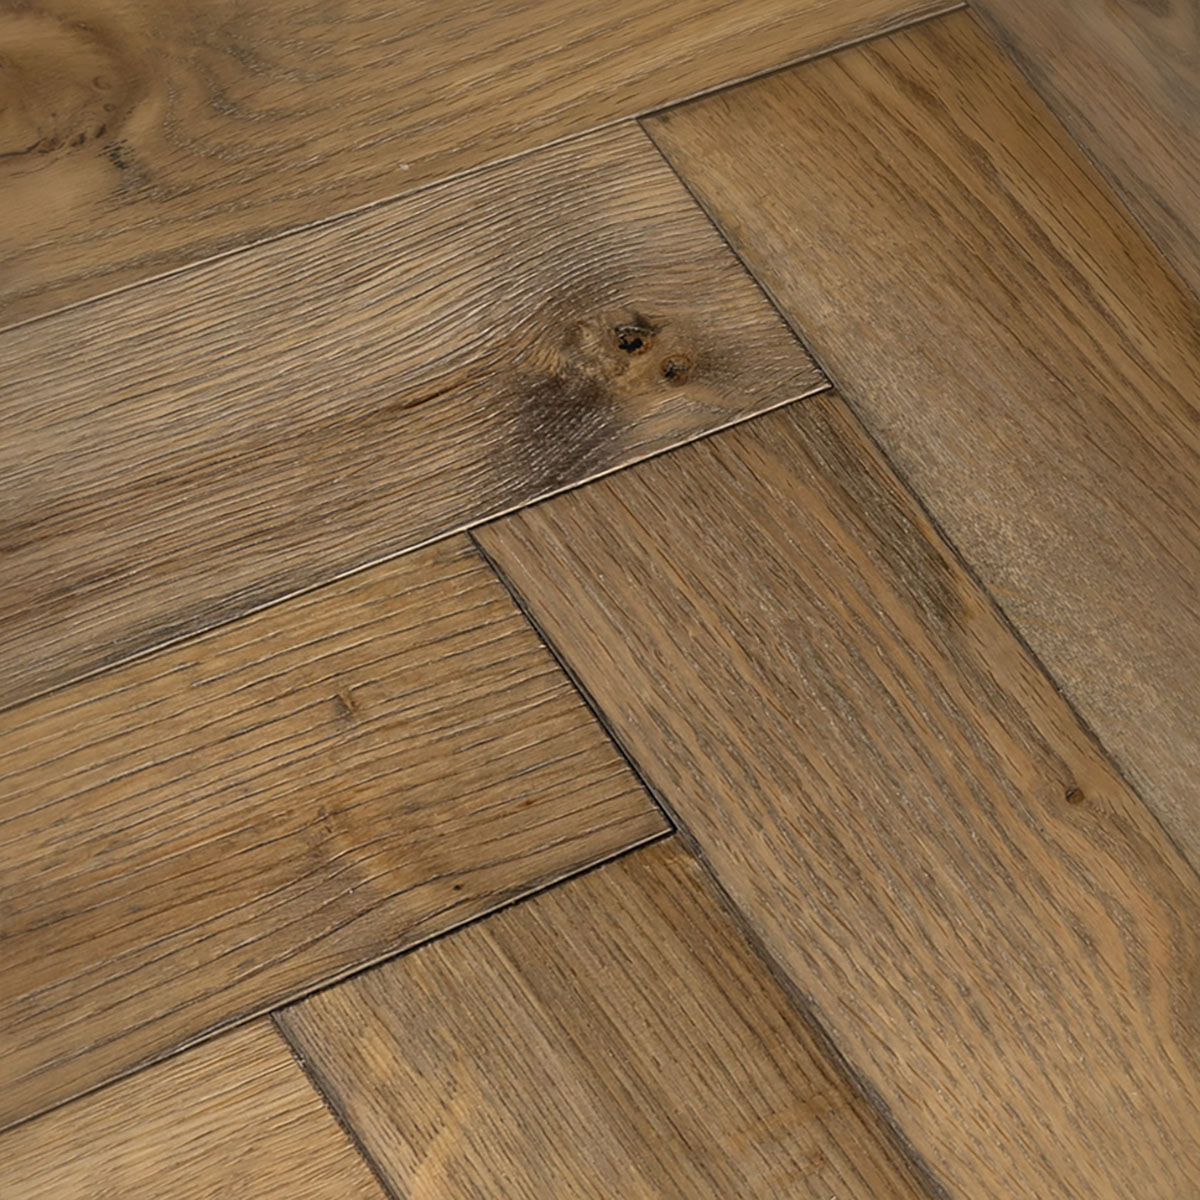 Henley Close - Rustic Oak Herringbone Floor 280mm x 70mm